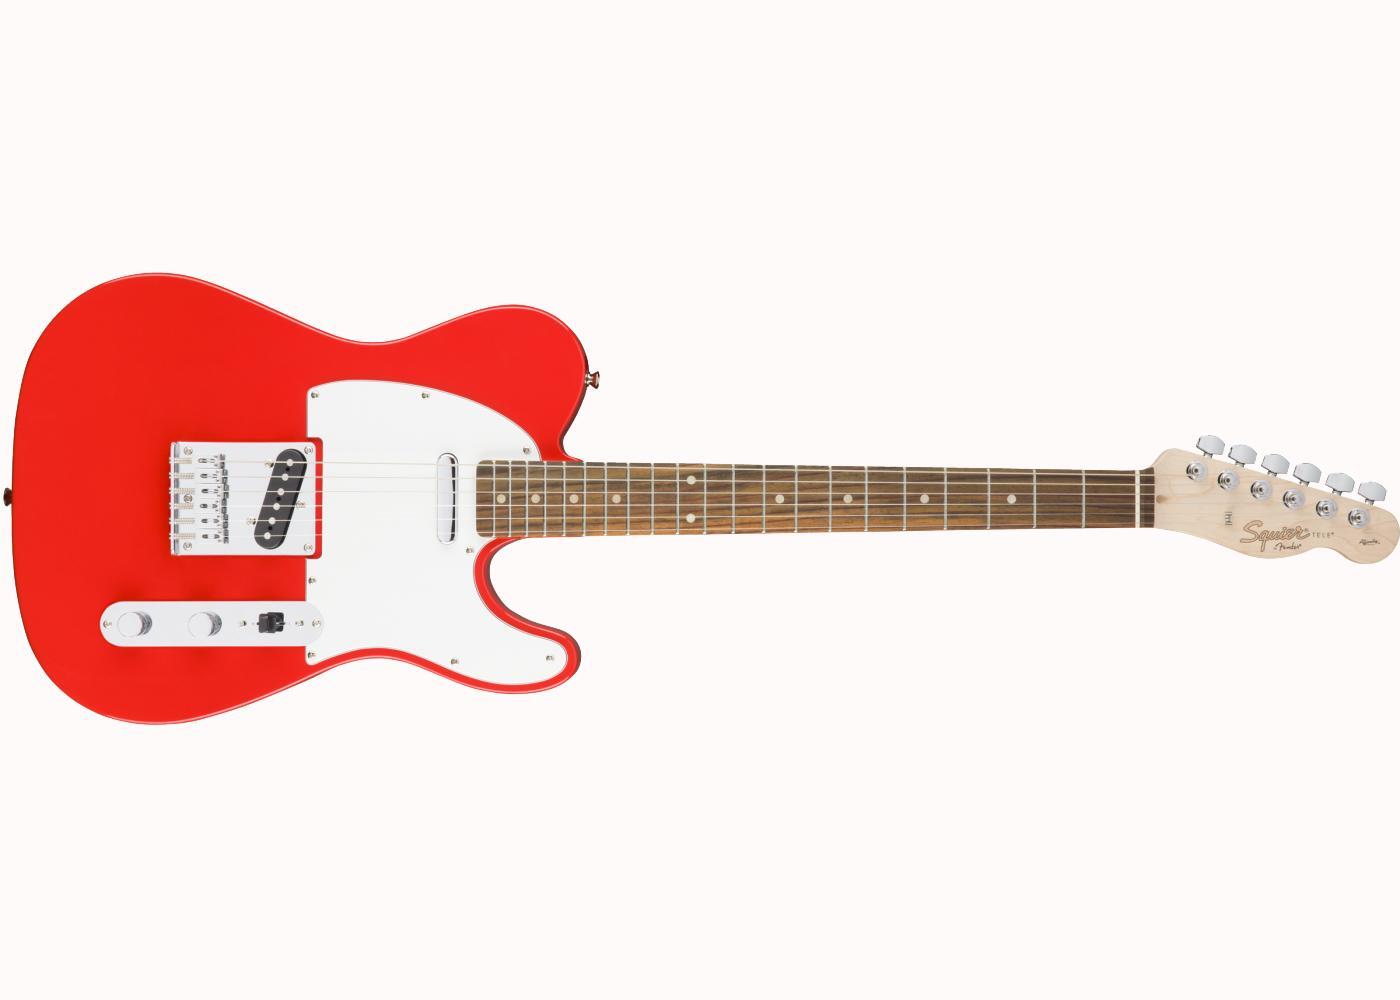 Đàn guitar điện Fender Squier Aff Tele Rcr 0370200570